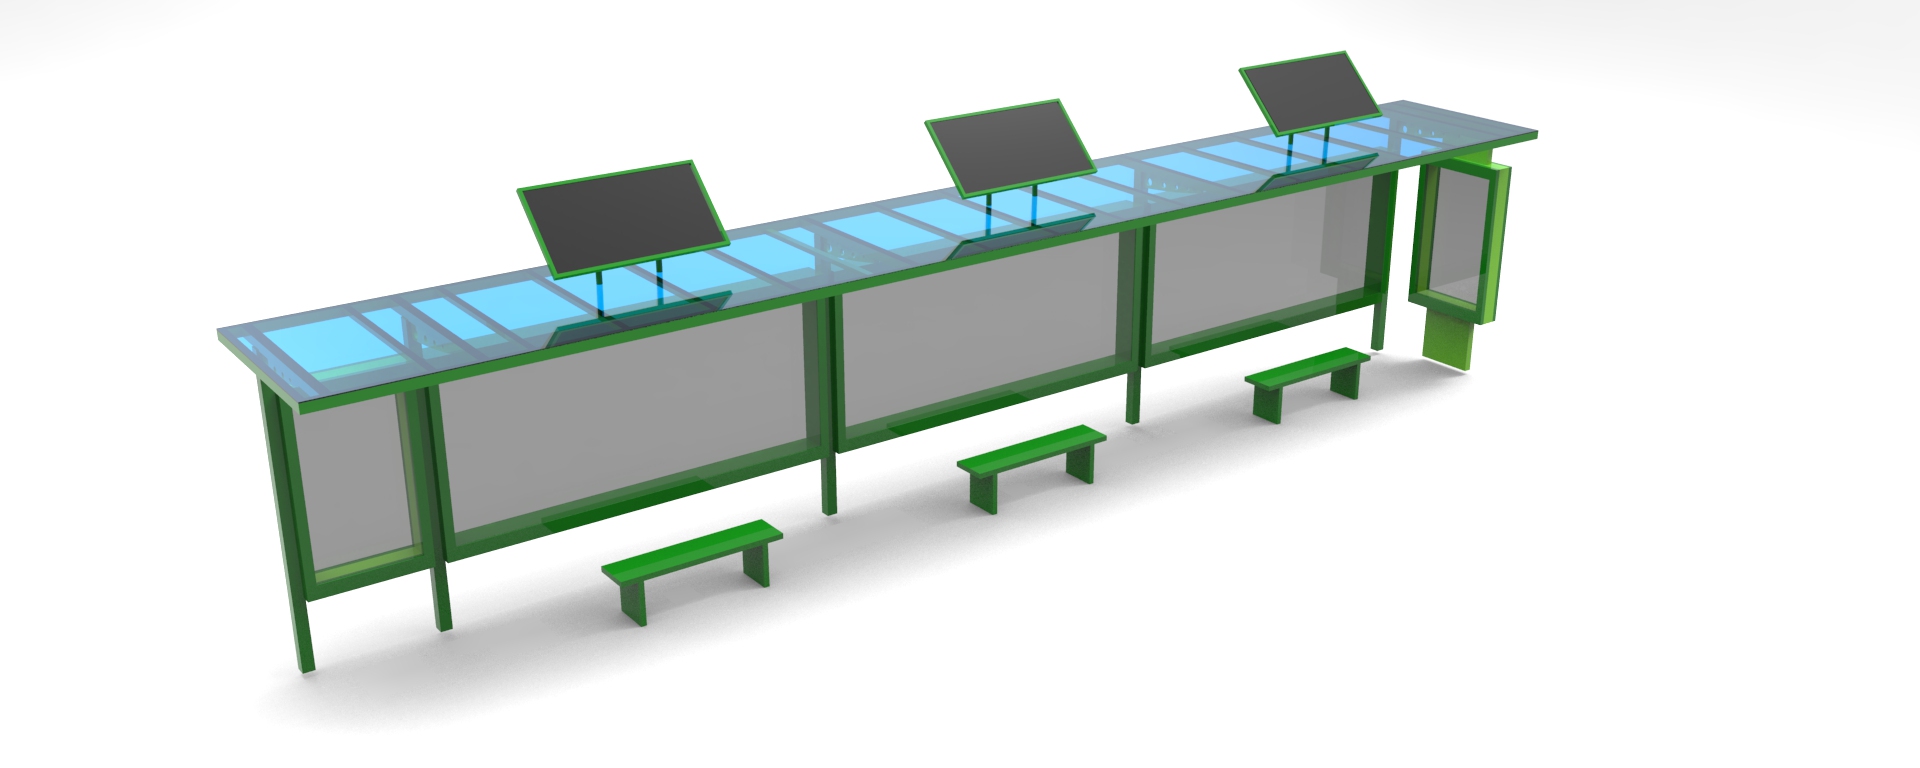 Solar bus shelter stations modernization of your city